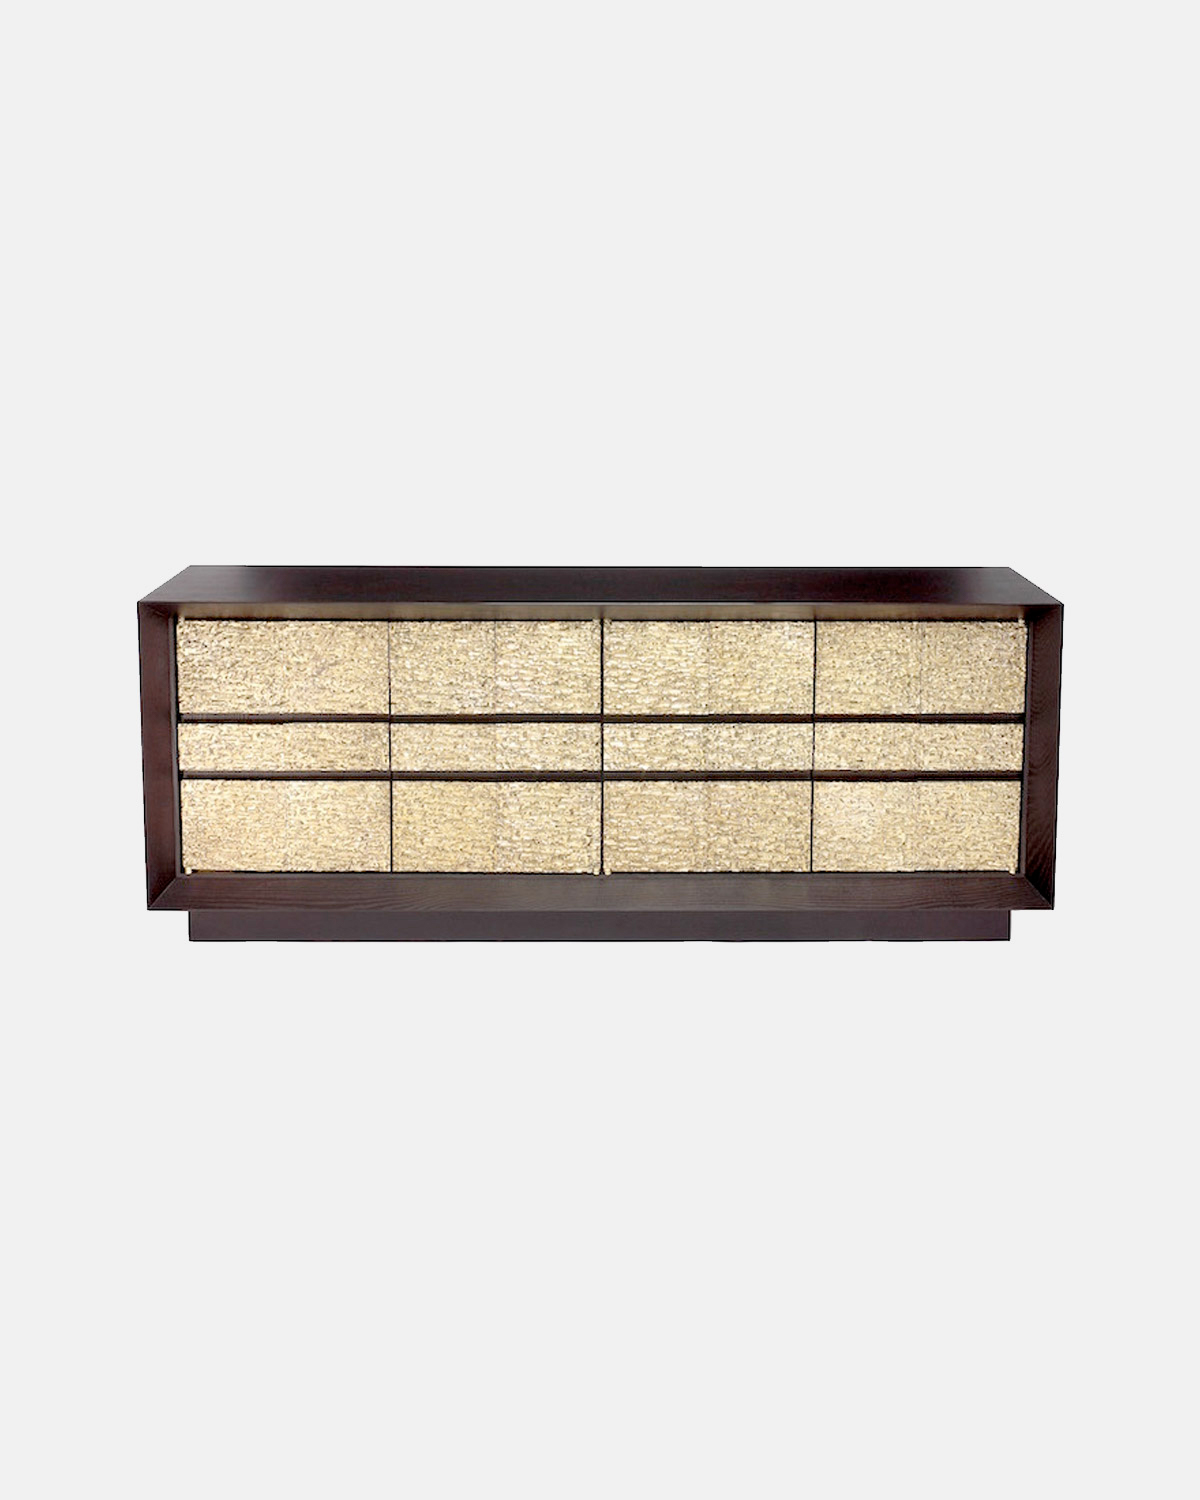 The Adriana Cabinet / Sideboard by Studio Van den Akker